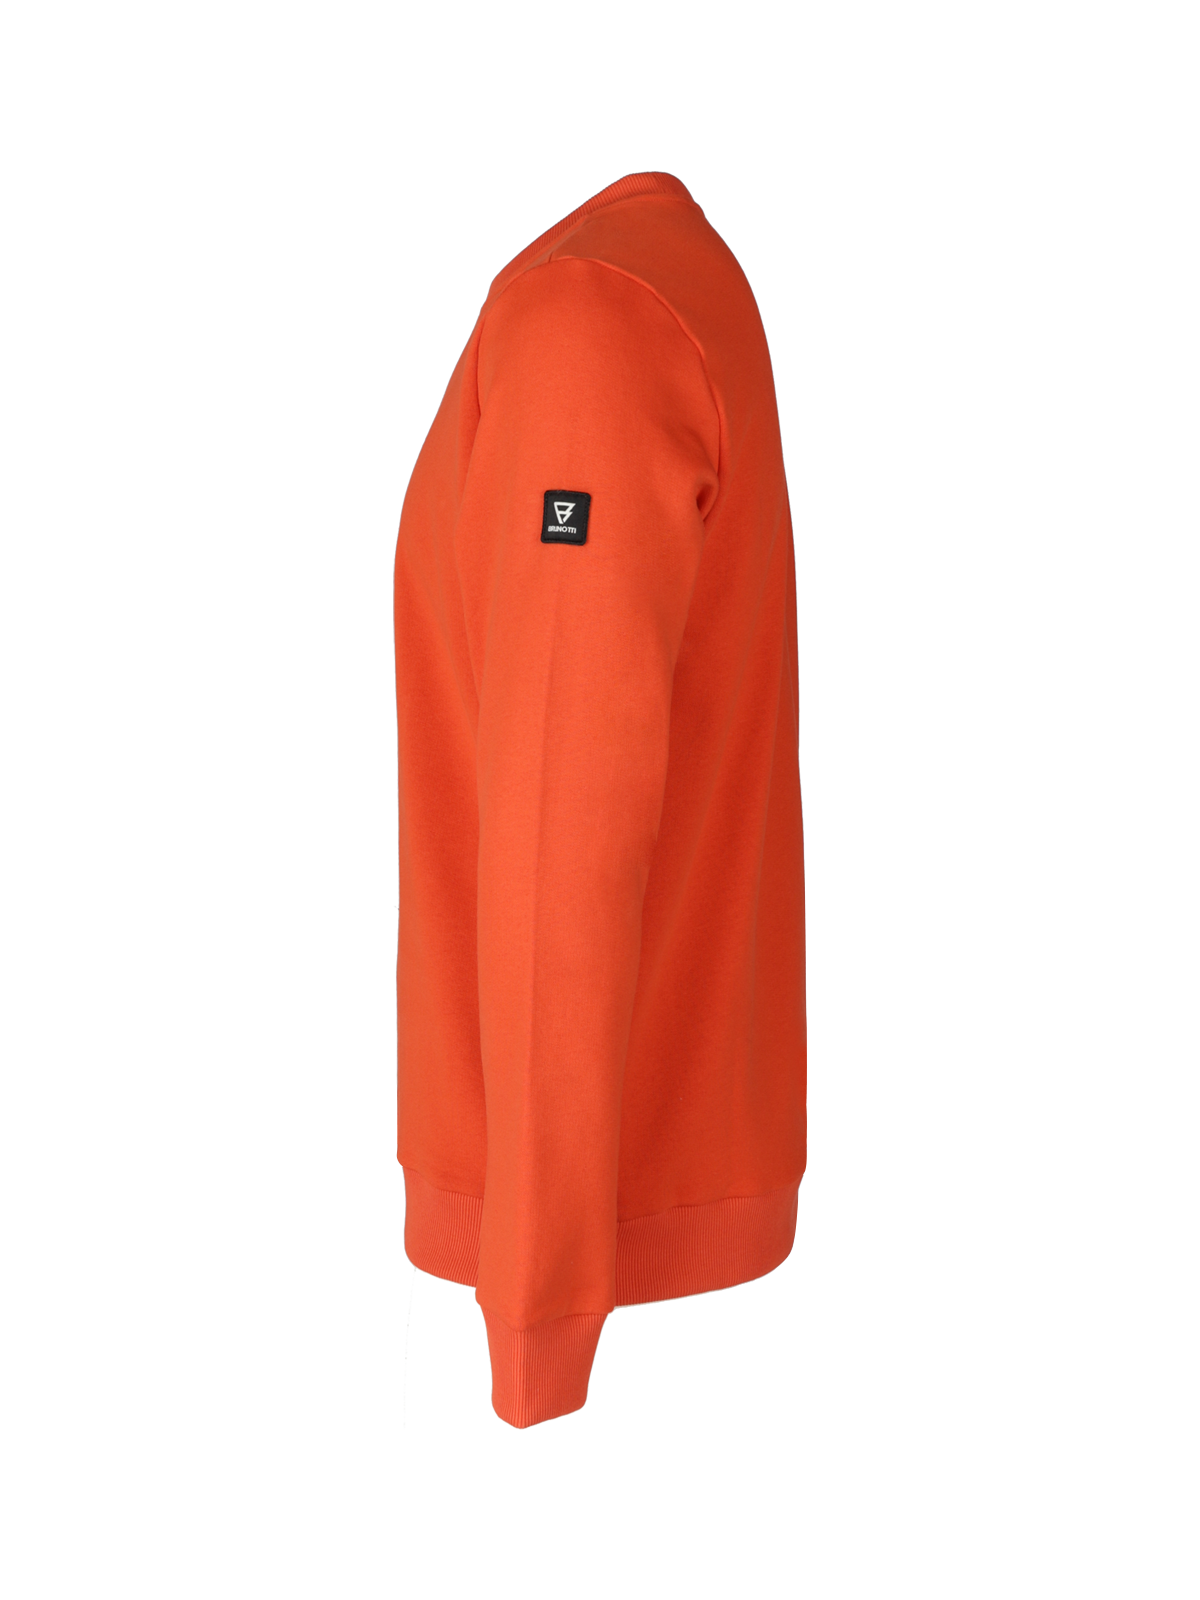 Notcher Herren Sweatshirt | Orange